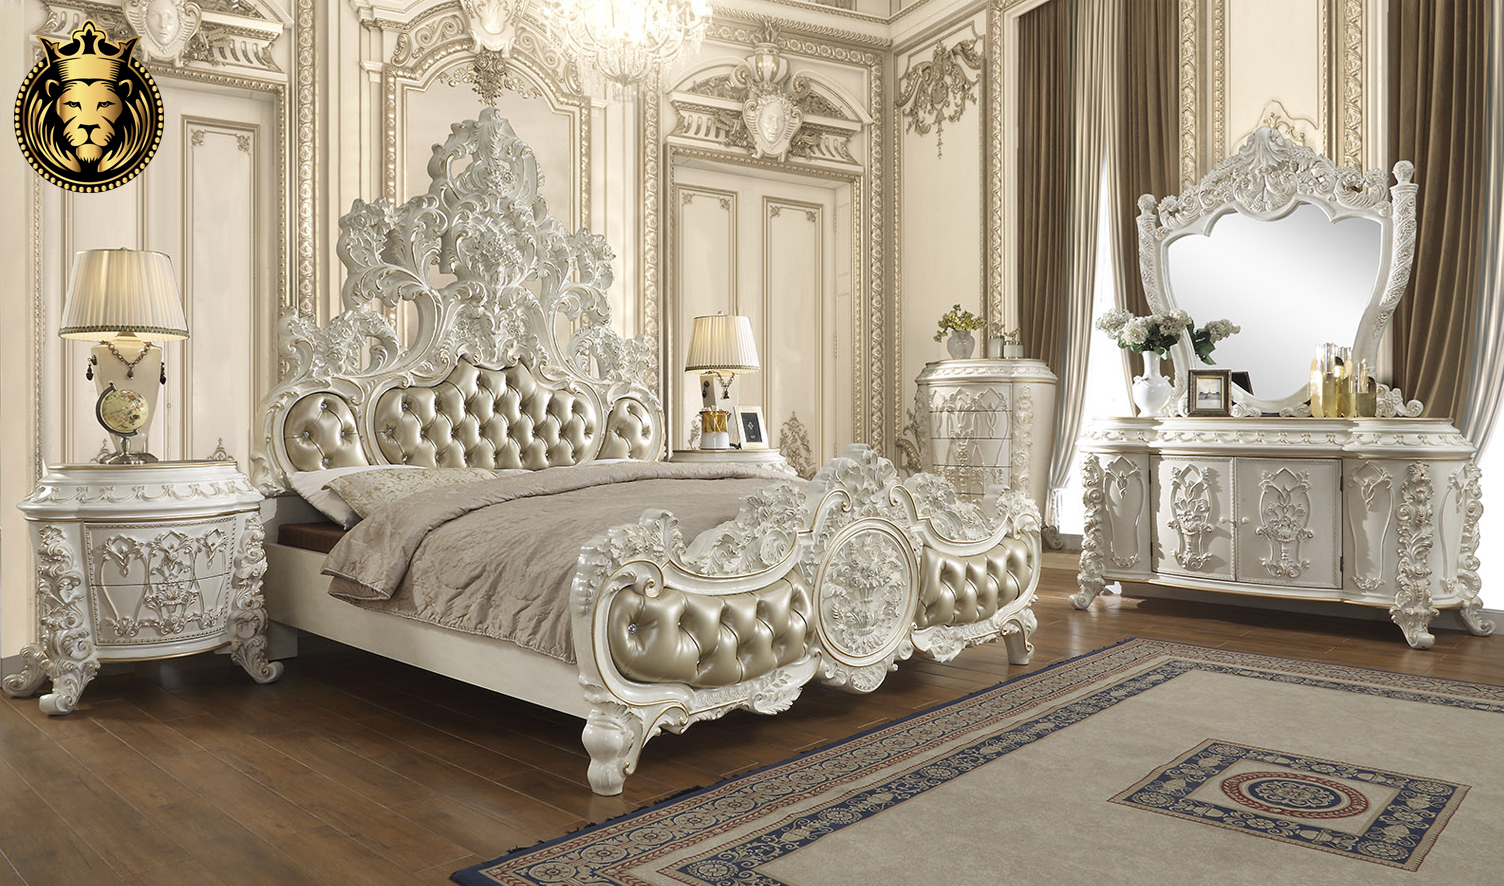 Carving Royal Bed